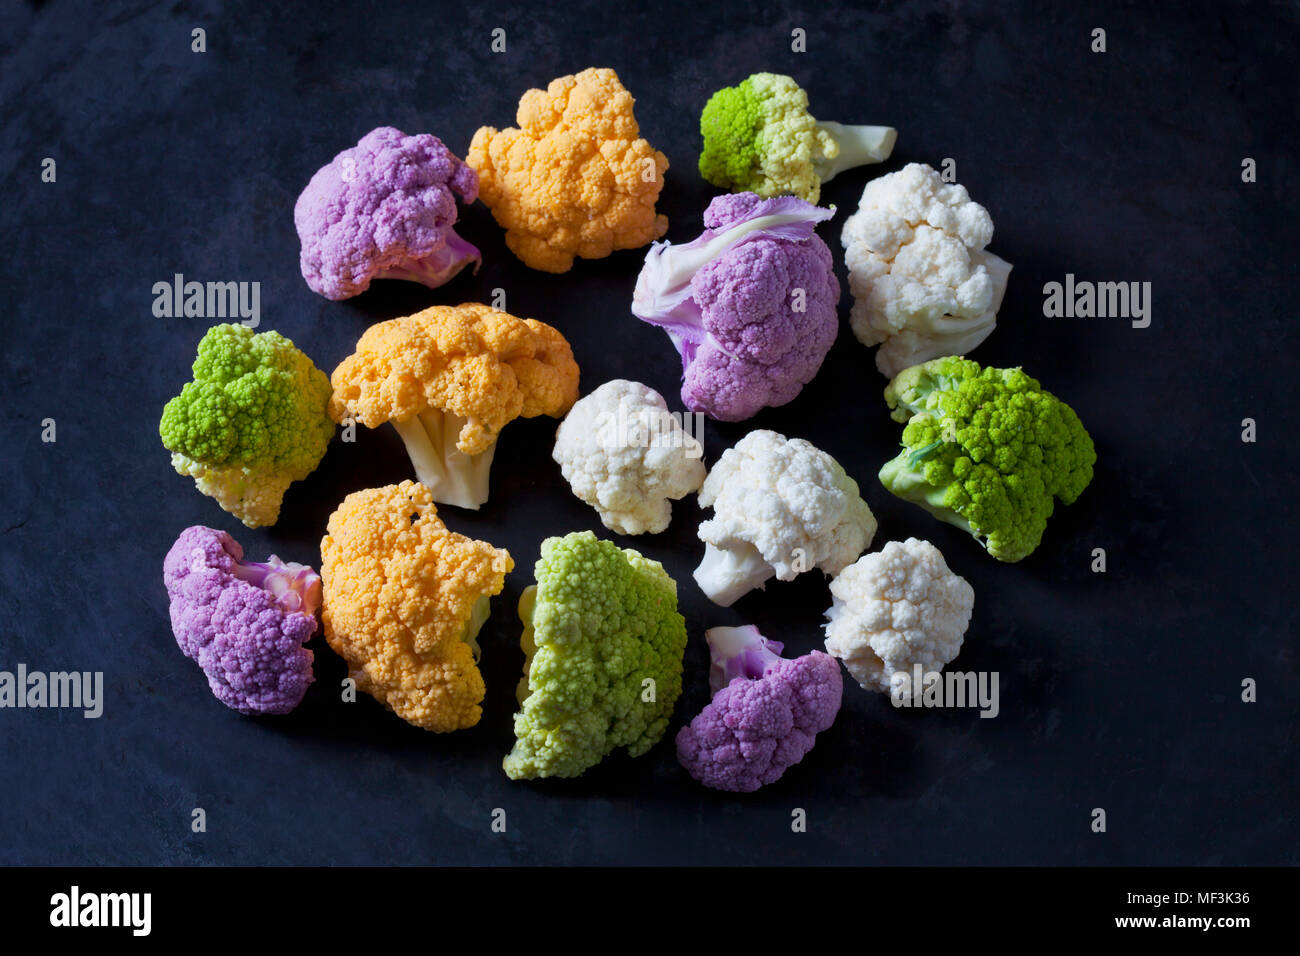 Coloured cauliflower florets on dark background Stock Photo